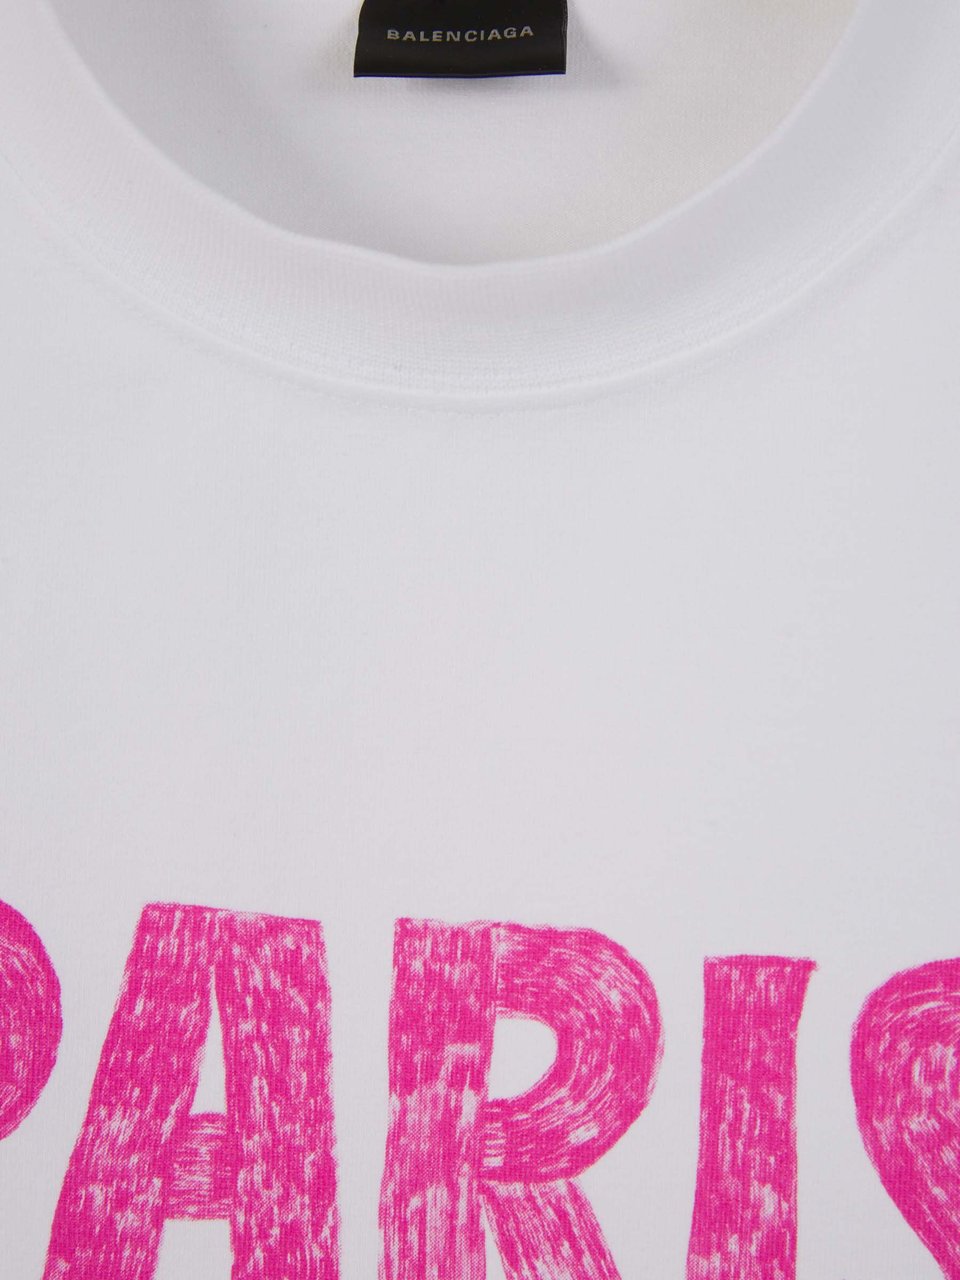 Balenciaga Paris Print T-Shirt Wit